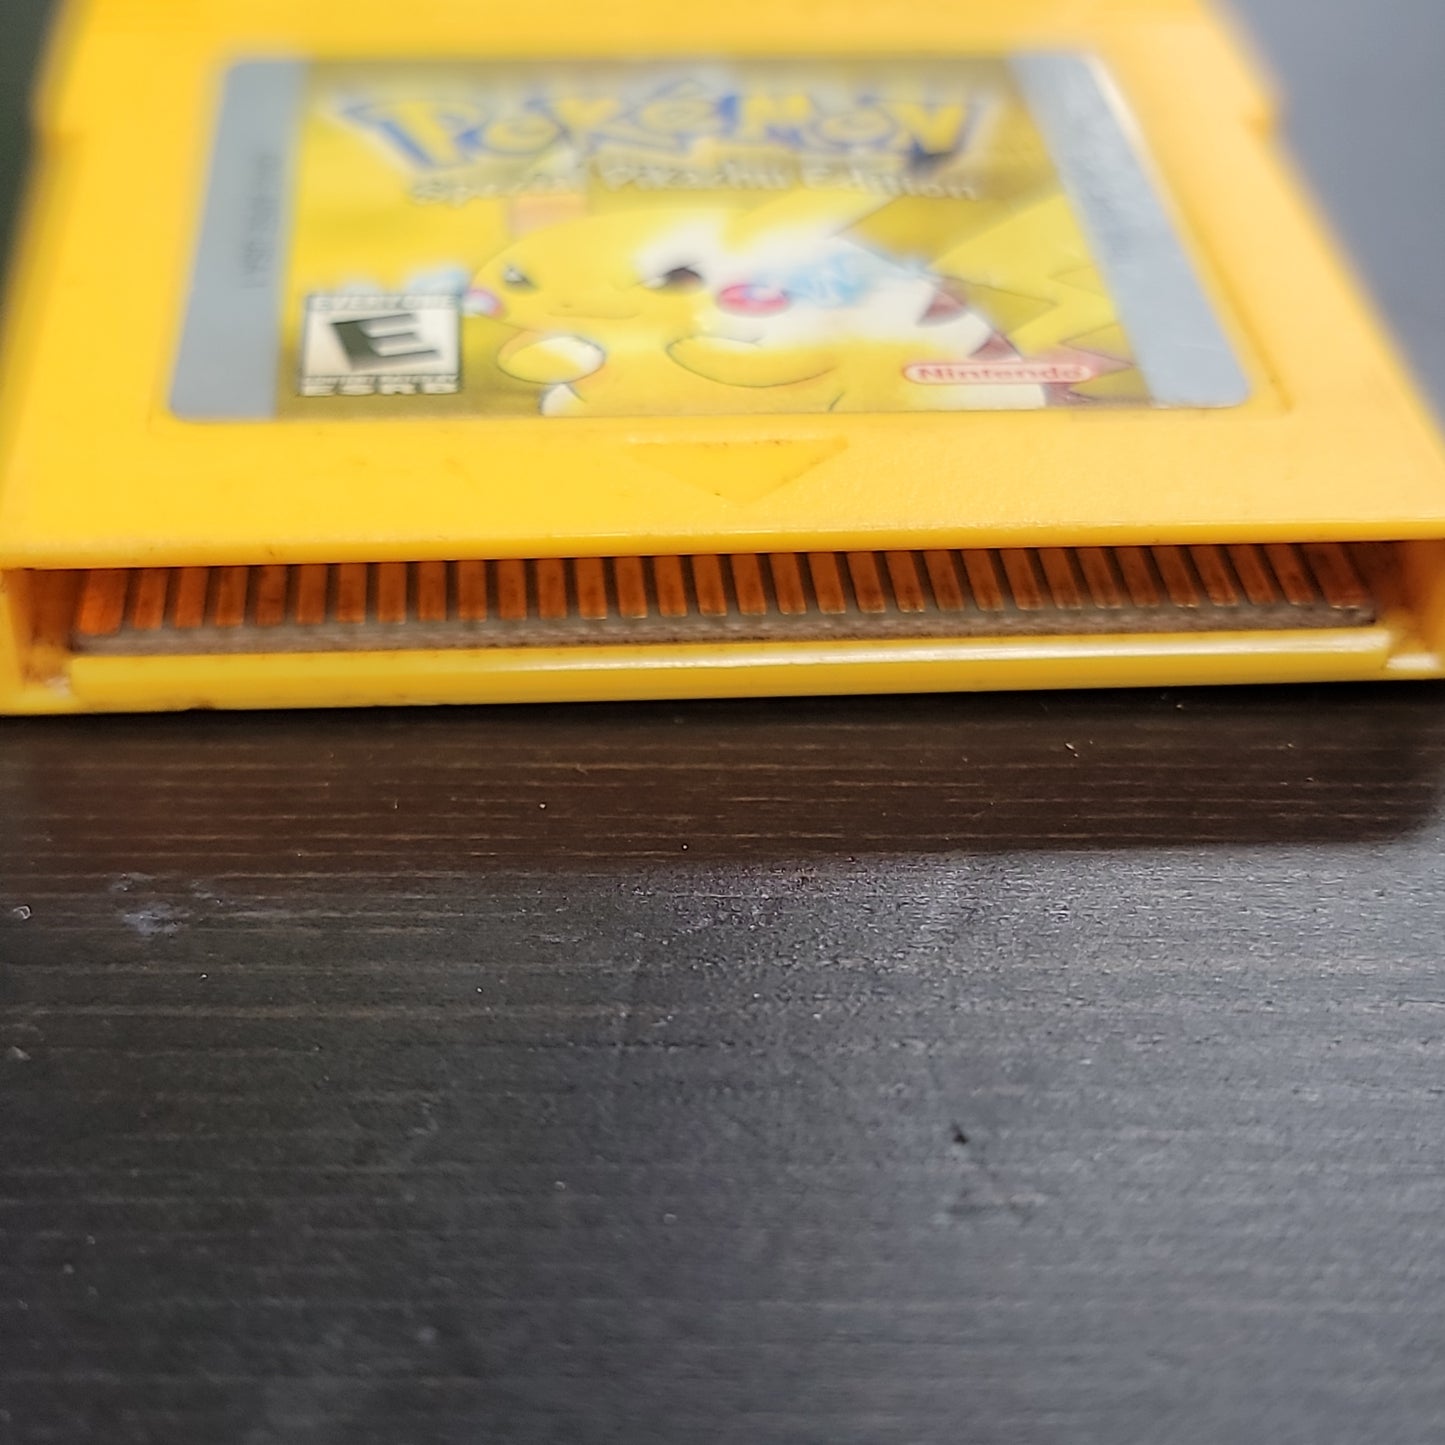 Pokemon Yellow Game Boy Game